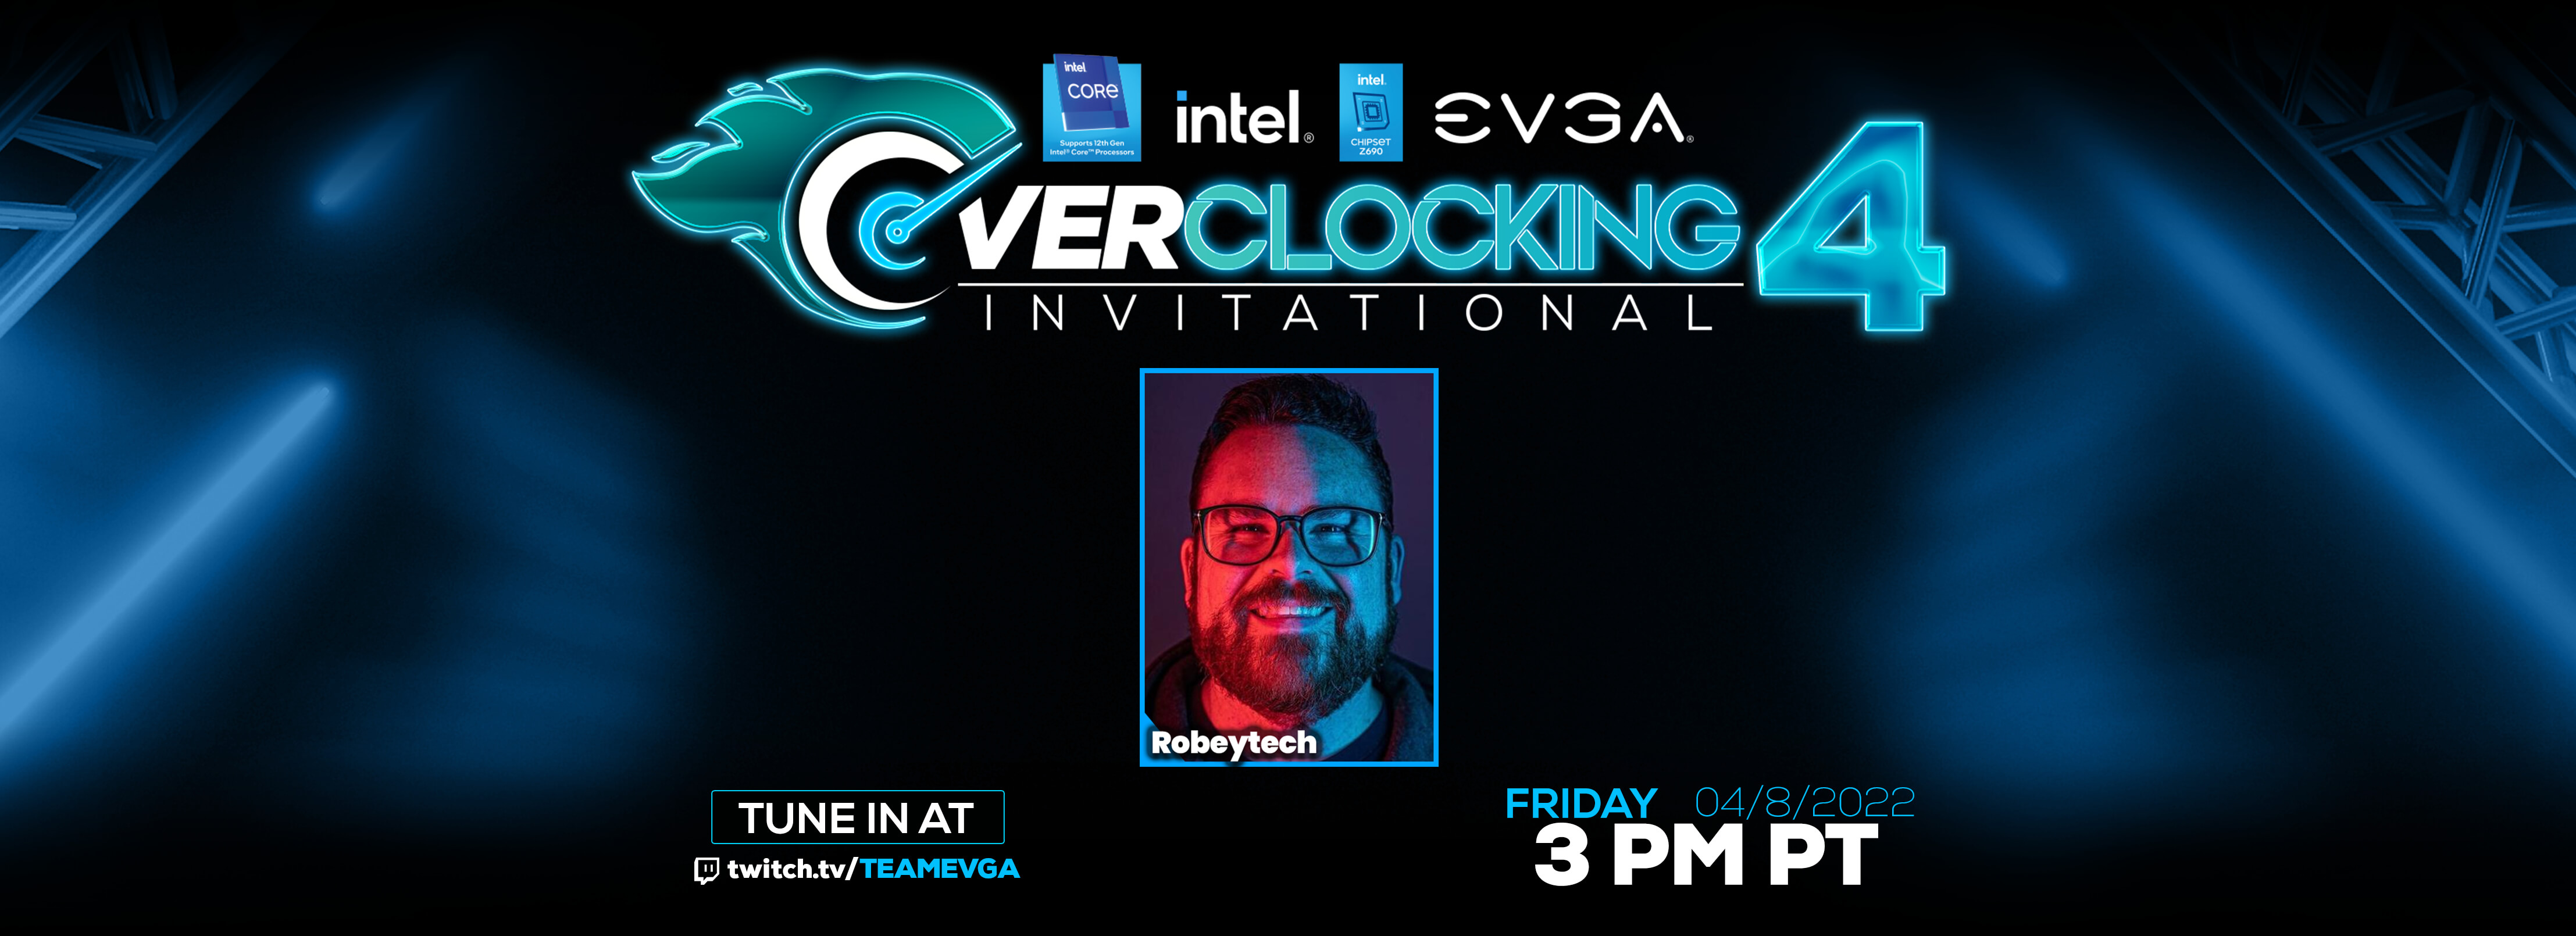 Intel x EVGA Overclocking Invitational 4